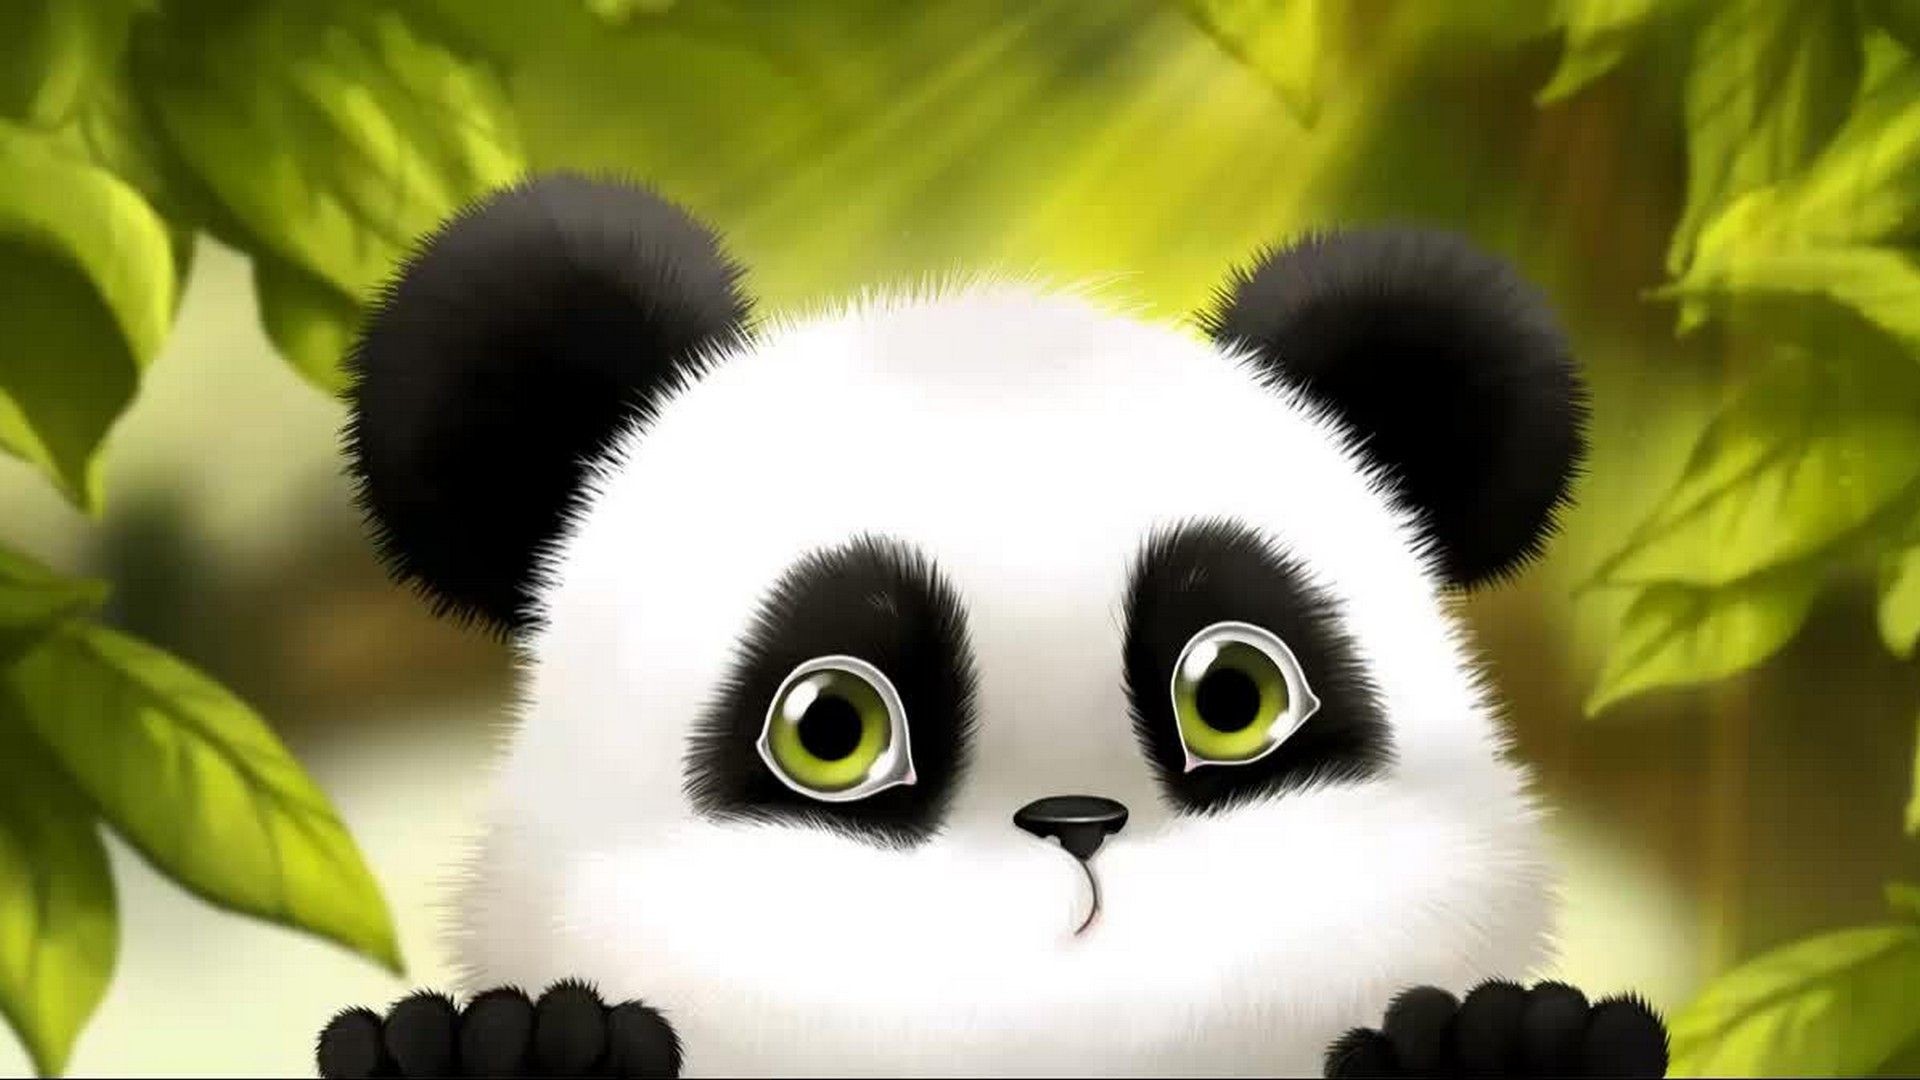 1920x1080 Cute Baby Panda Cartoon Wallpaper | Best HD Wallpapers